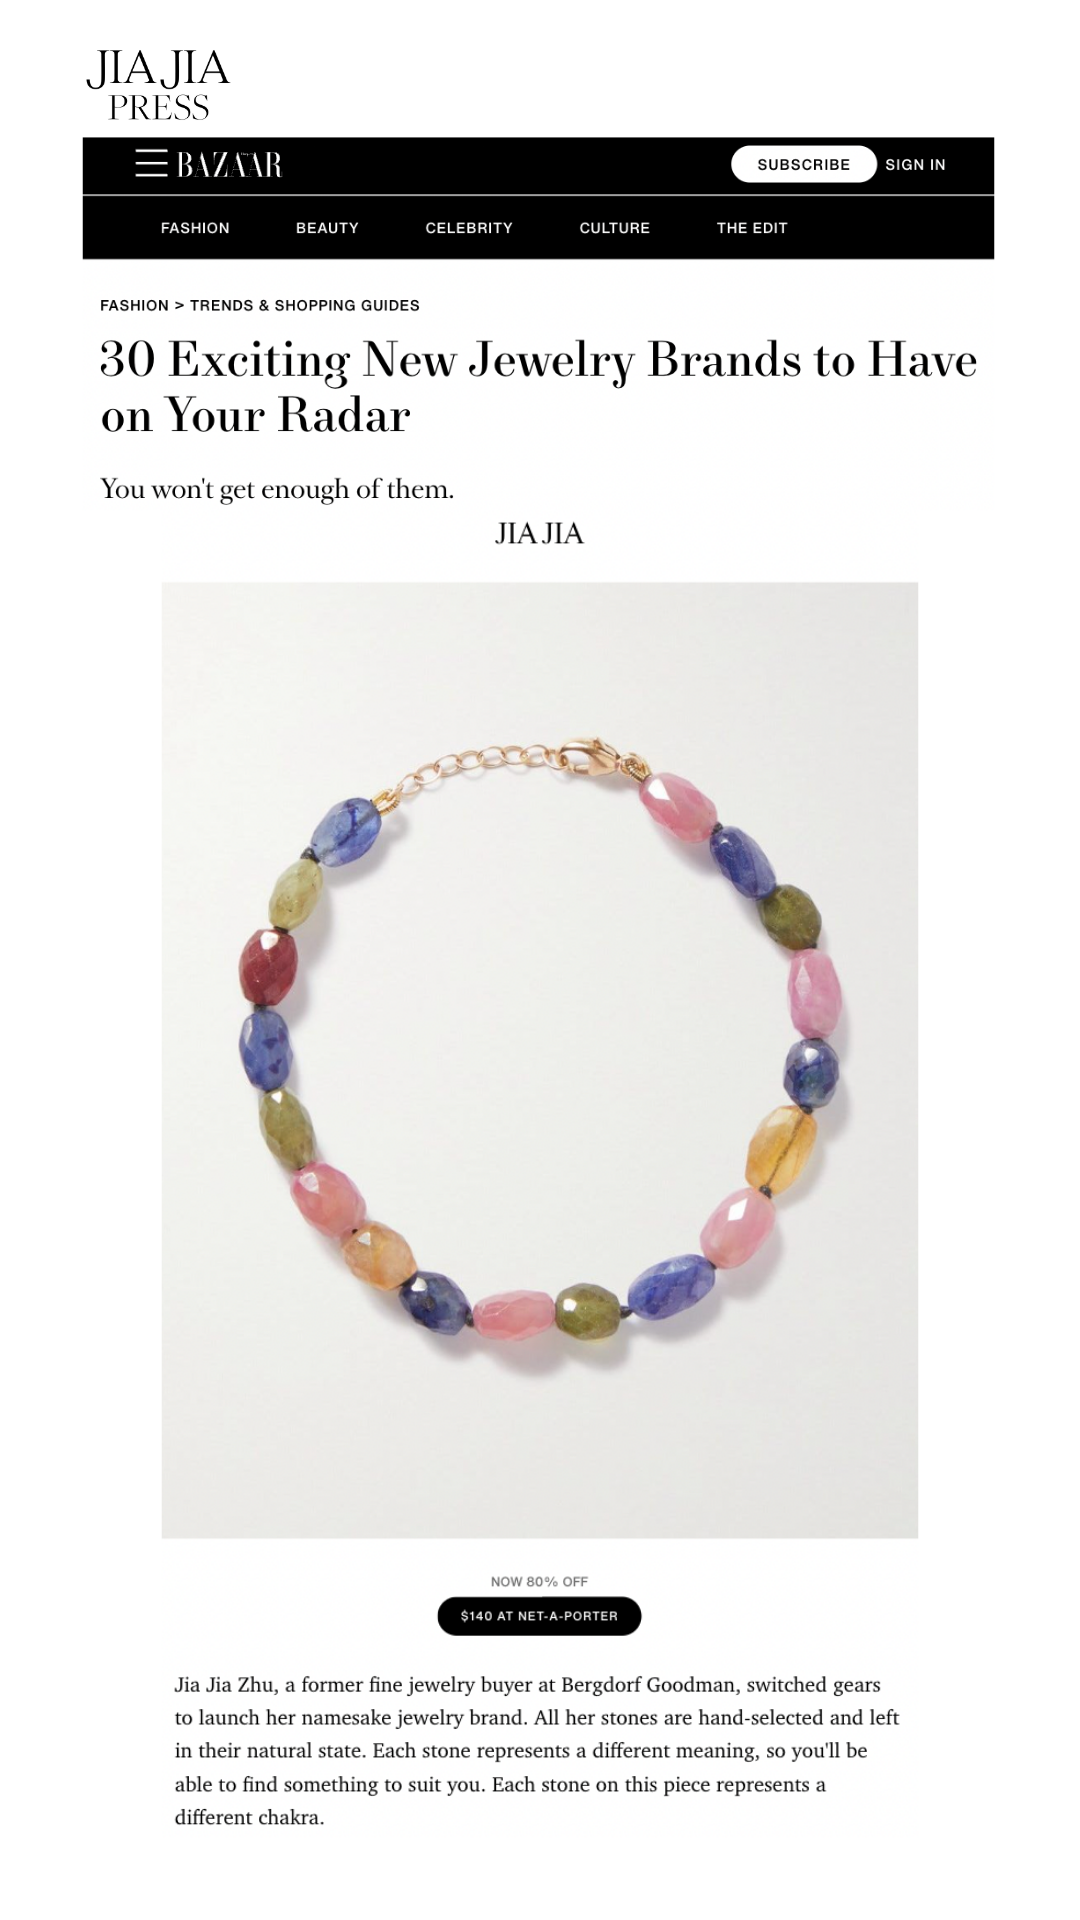 Arizona Rainbow Sapphire Faceted Candy Bracelet